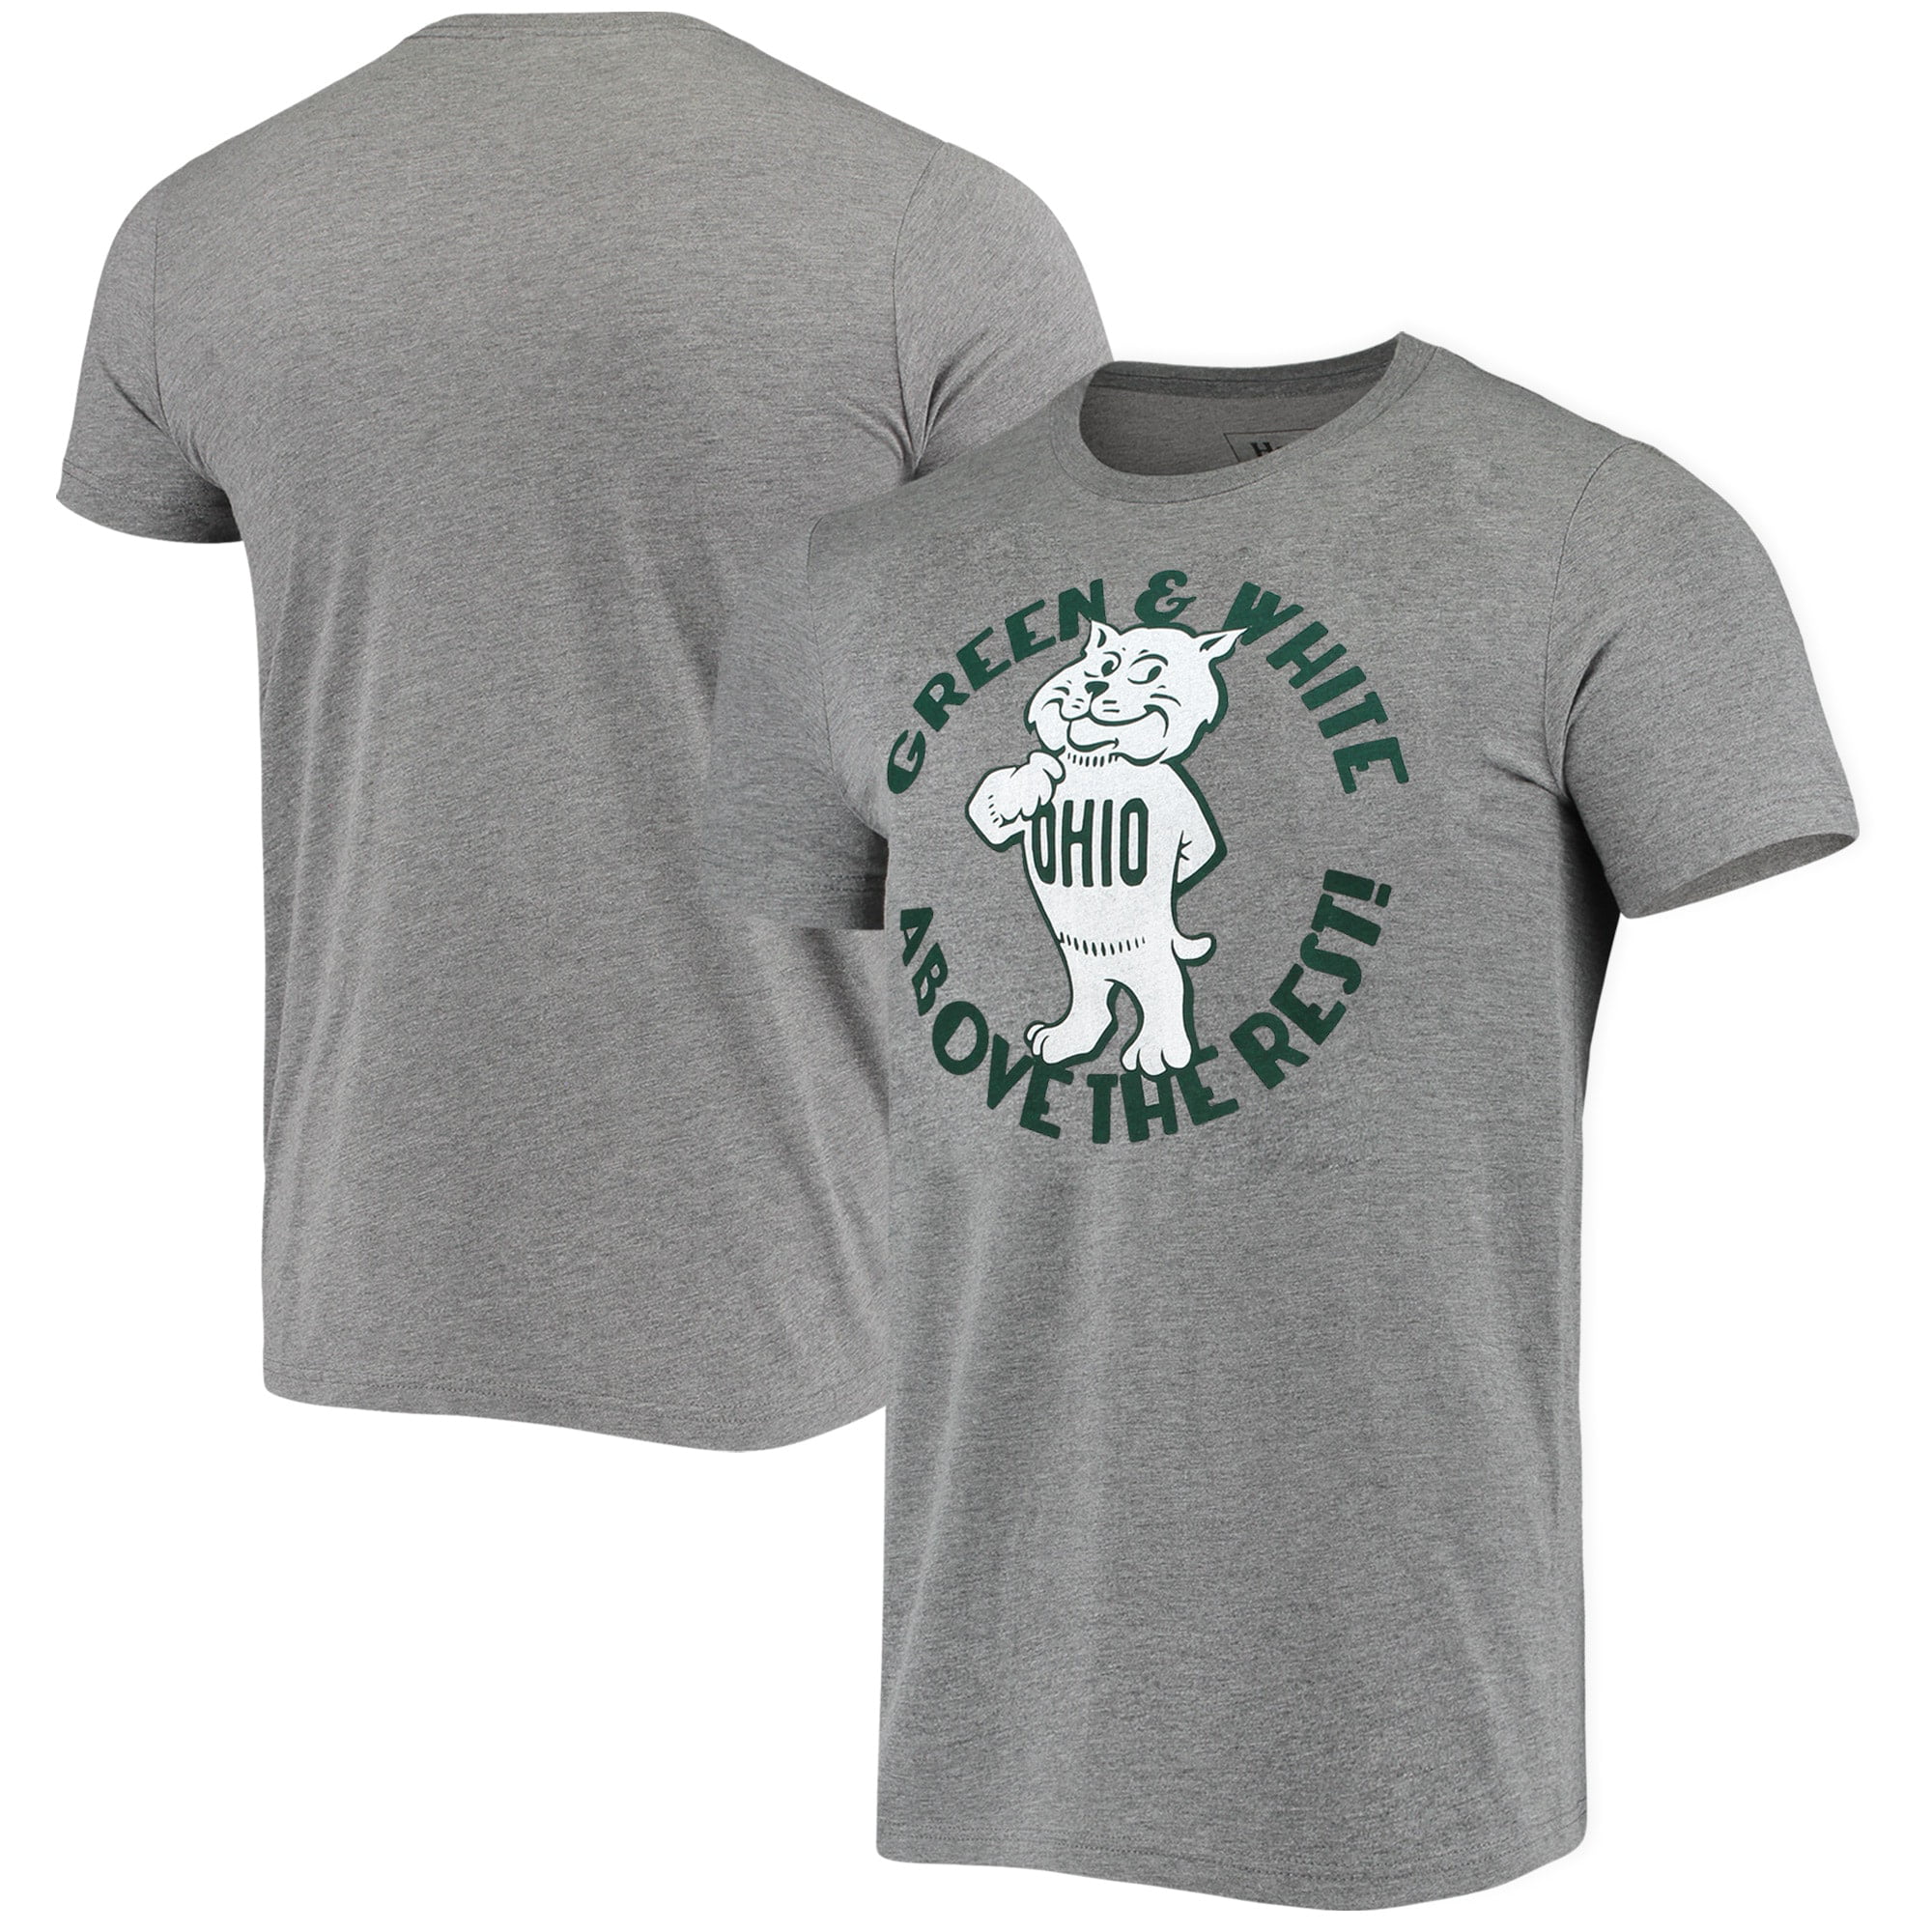 New York Men's Cotton T-Shirt New York Throwbacks New York GOAT 3 WHT